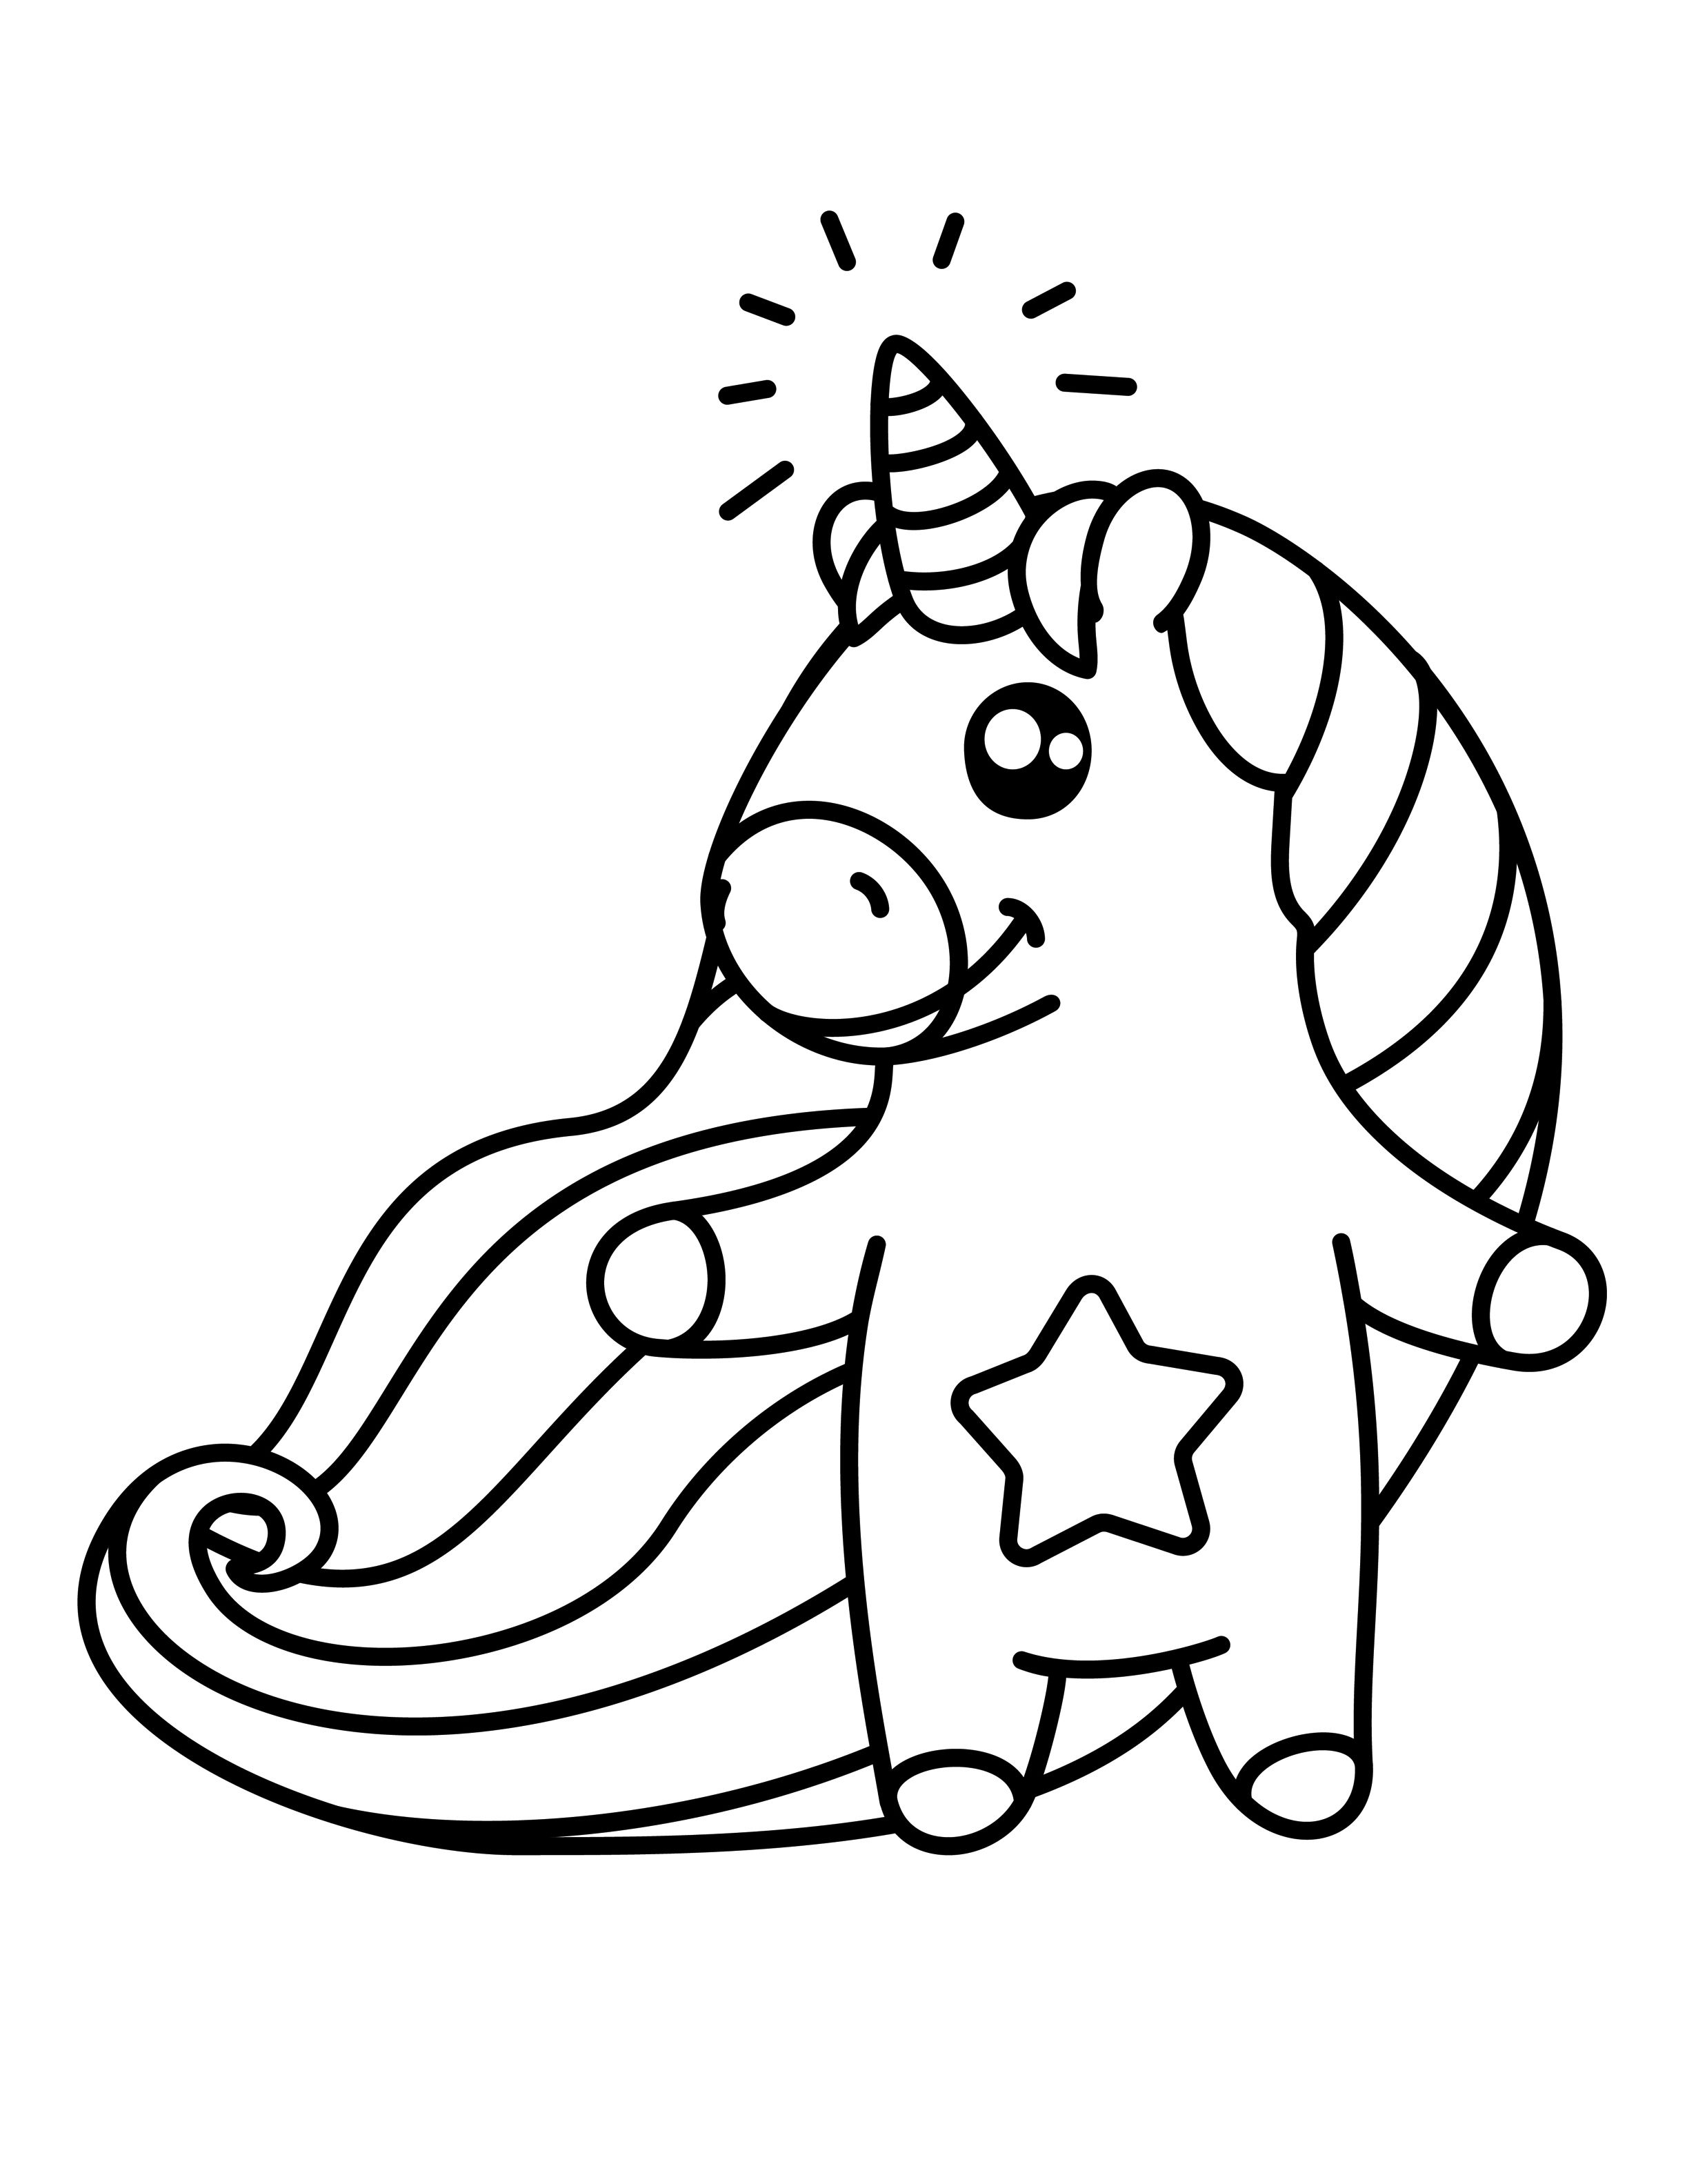 Unicorn coloring pages for kids pãginas para colorir de unicãrnio pãginas para colorir unicornio para colorir